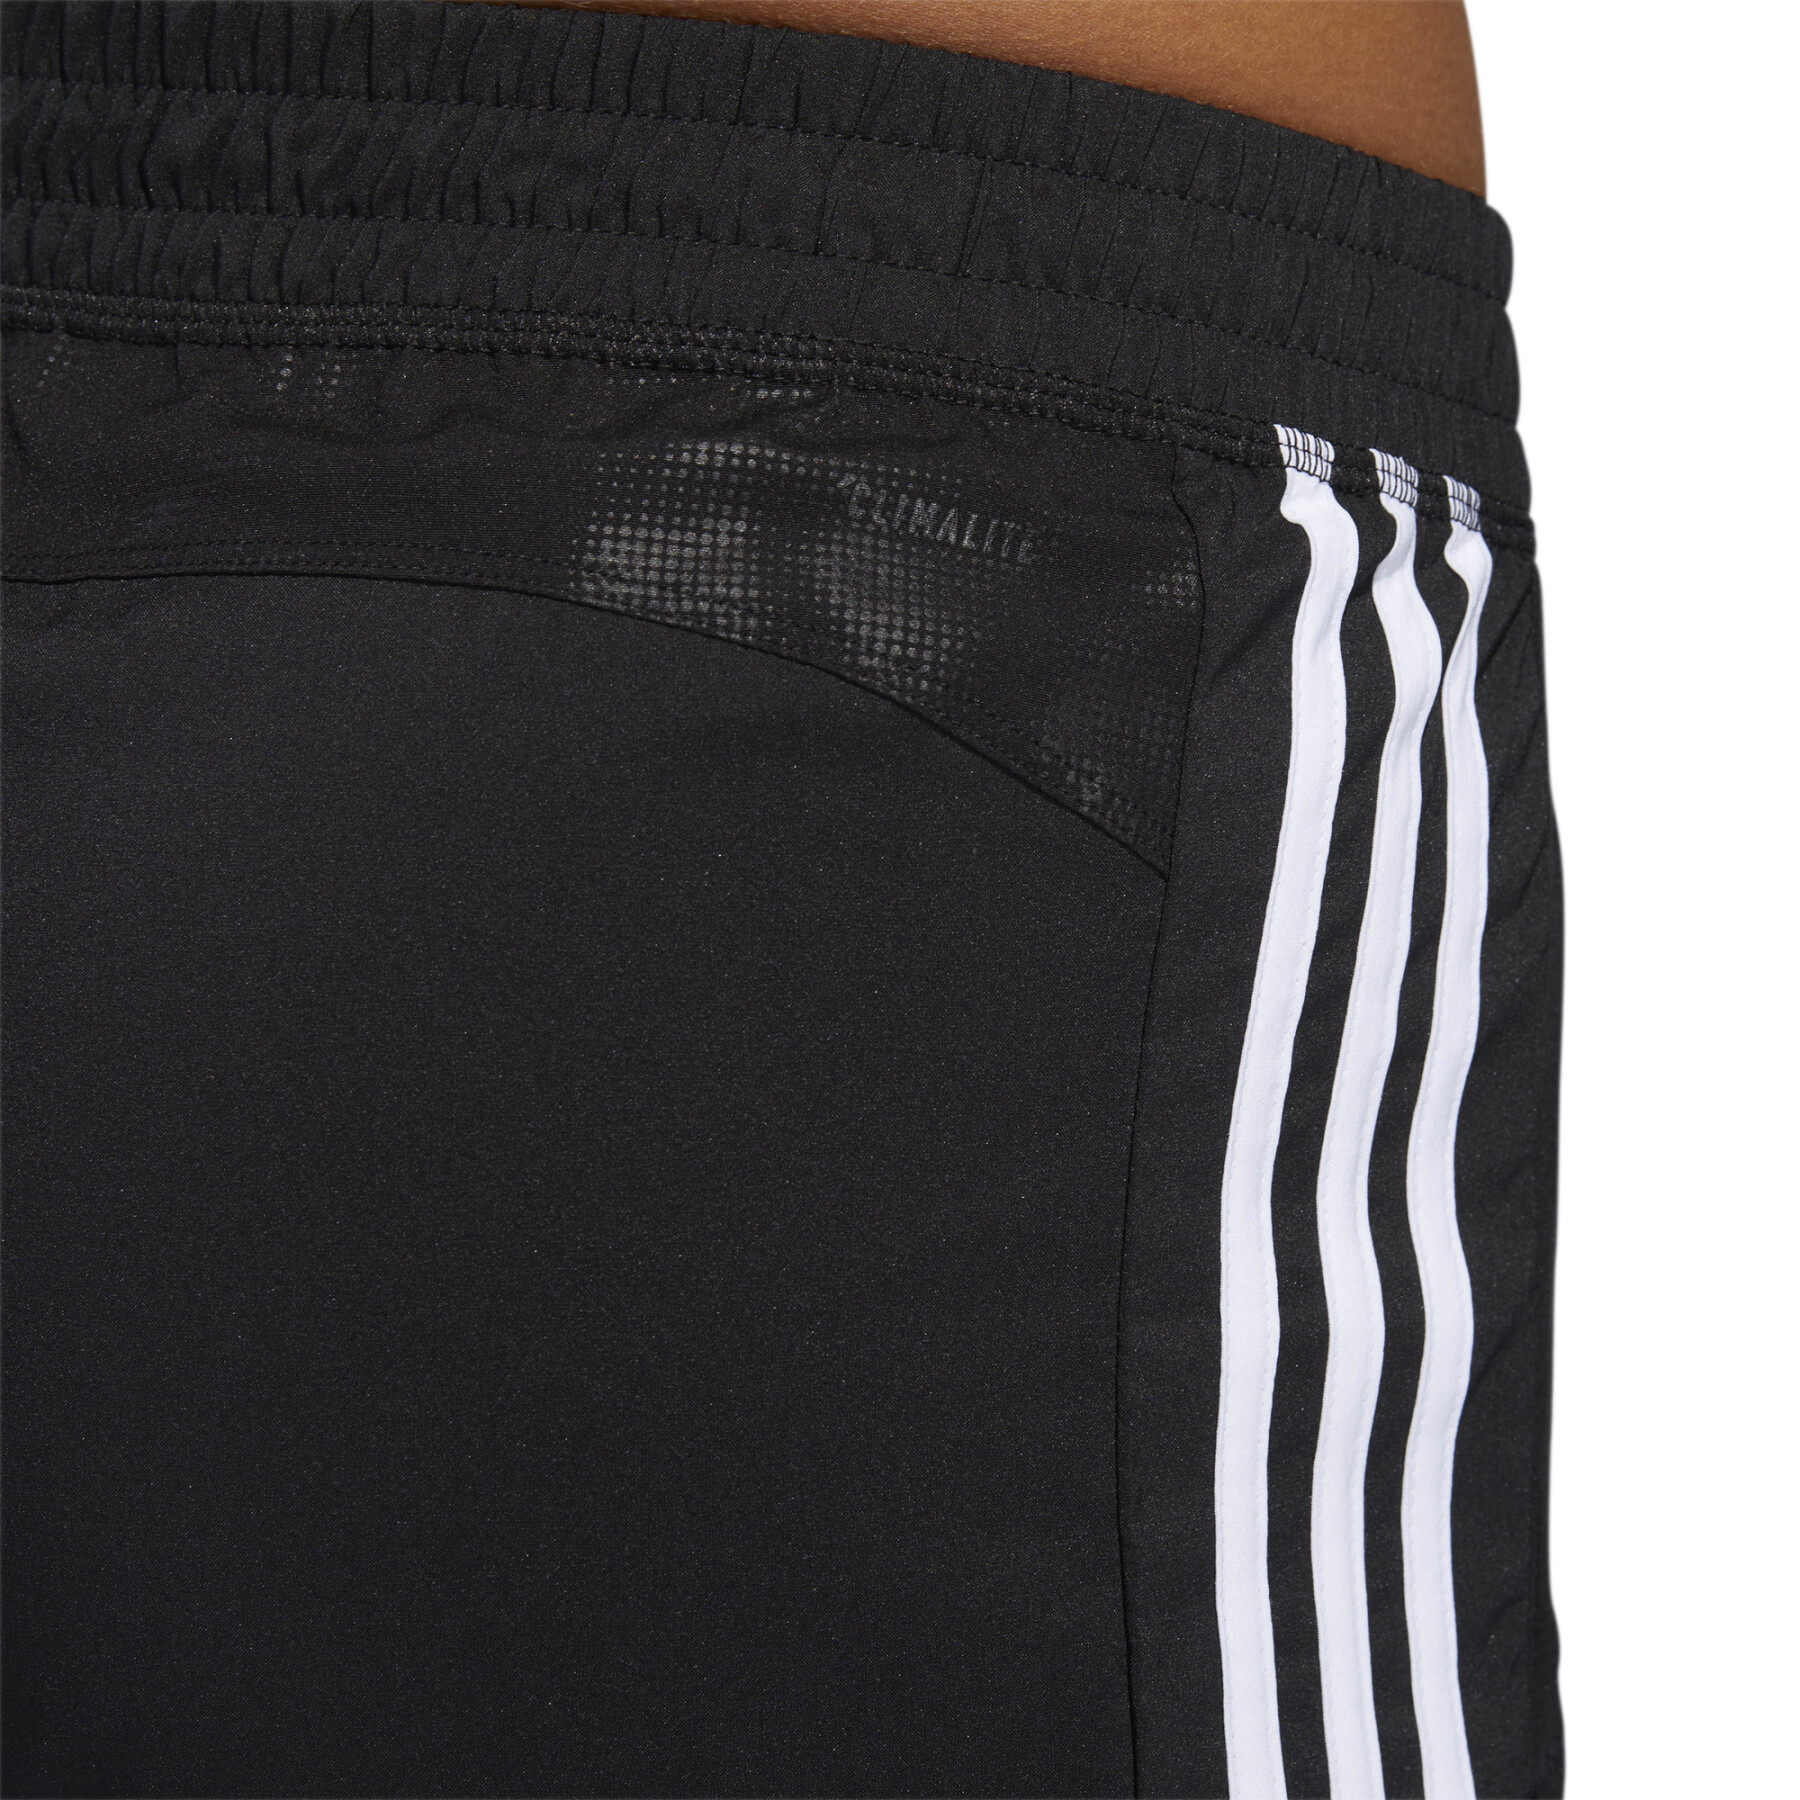 Women's shorts adidas 3-Stripes